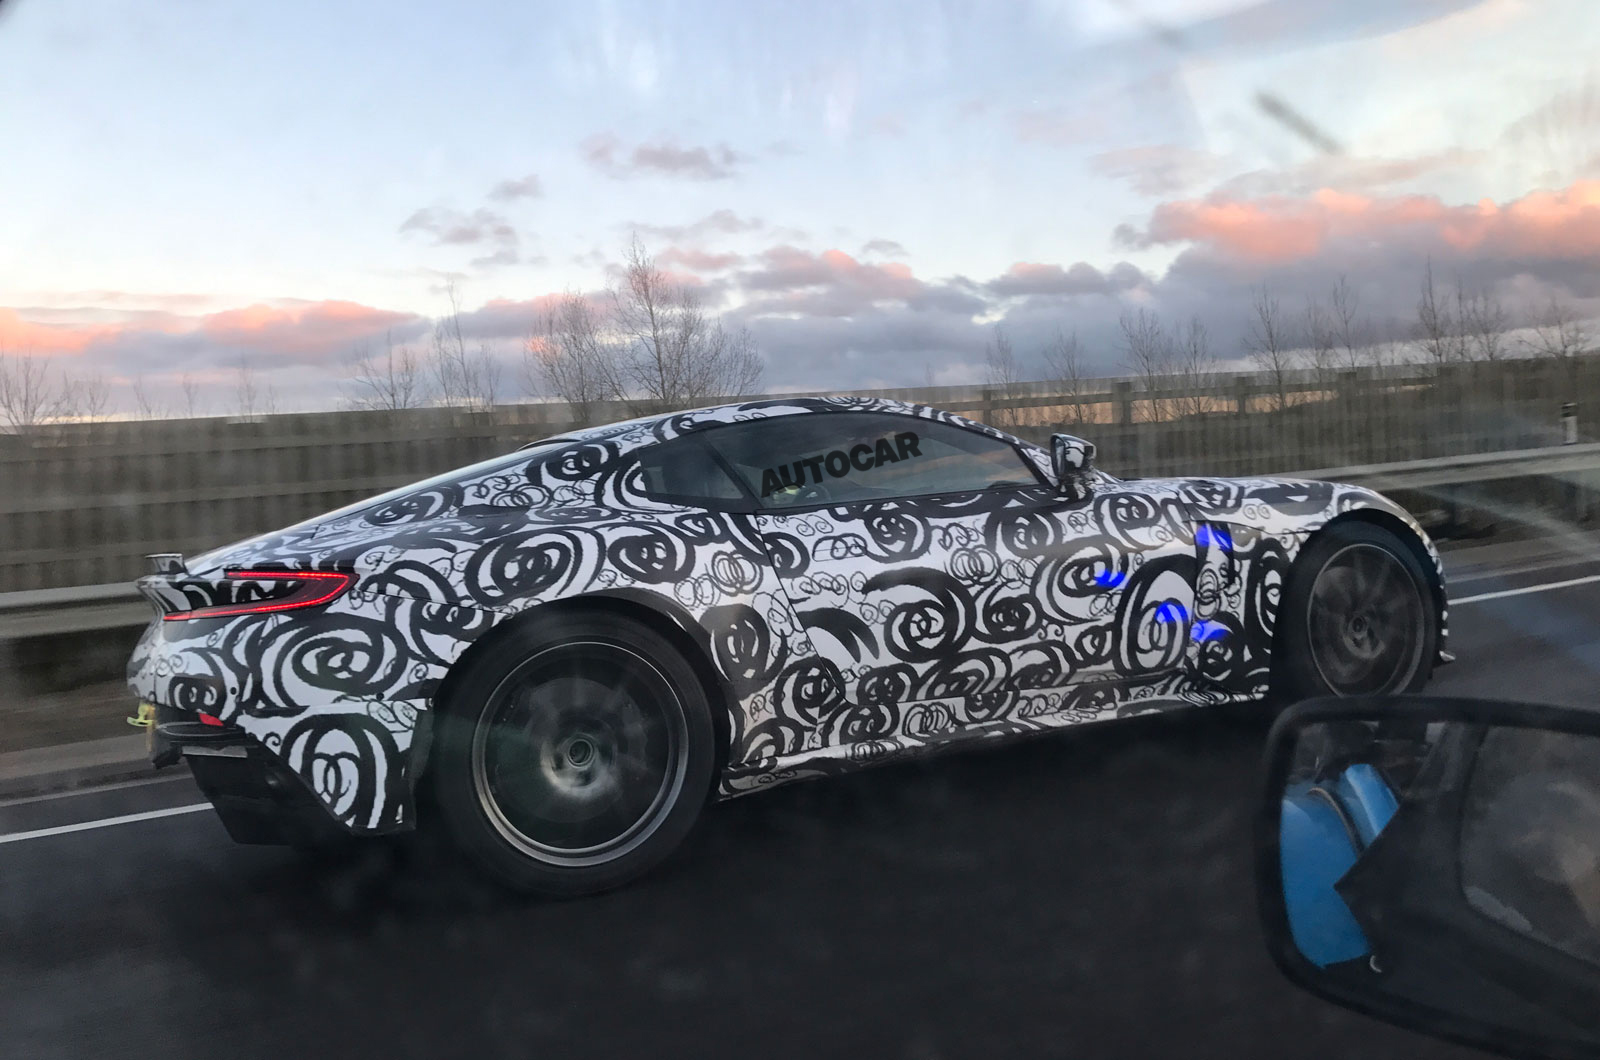 Aston Martin Rapide  Spotted - PistonHeads UK